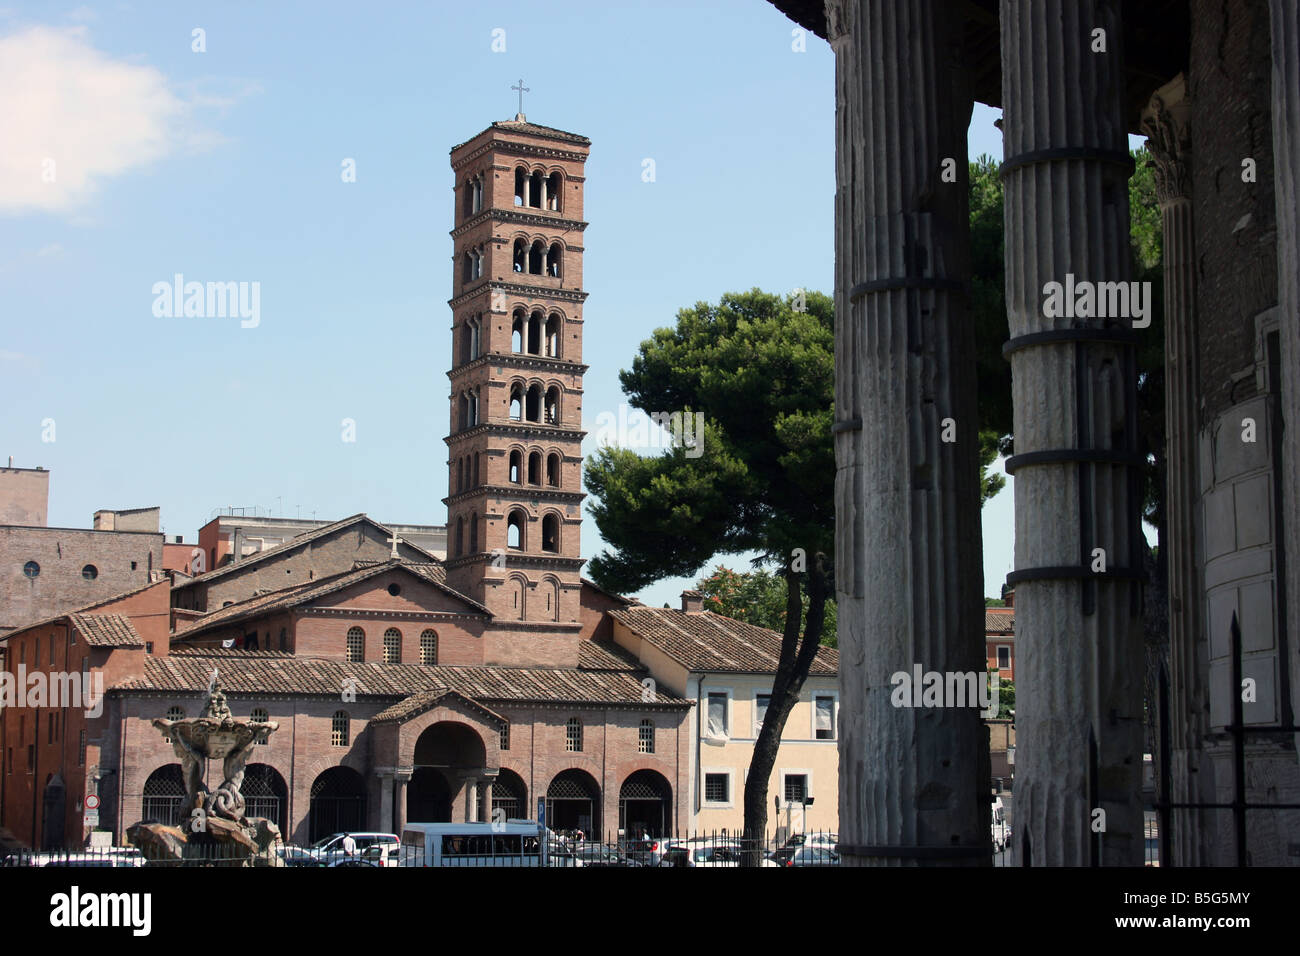 L'église Santa Maria in Cosmedin, Rome, Italie Banque D'Images